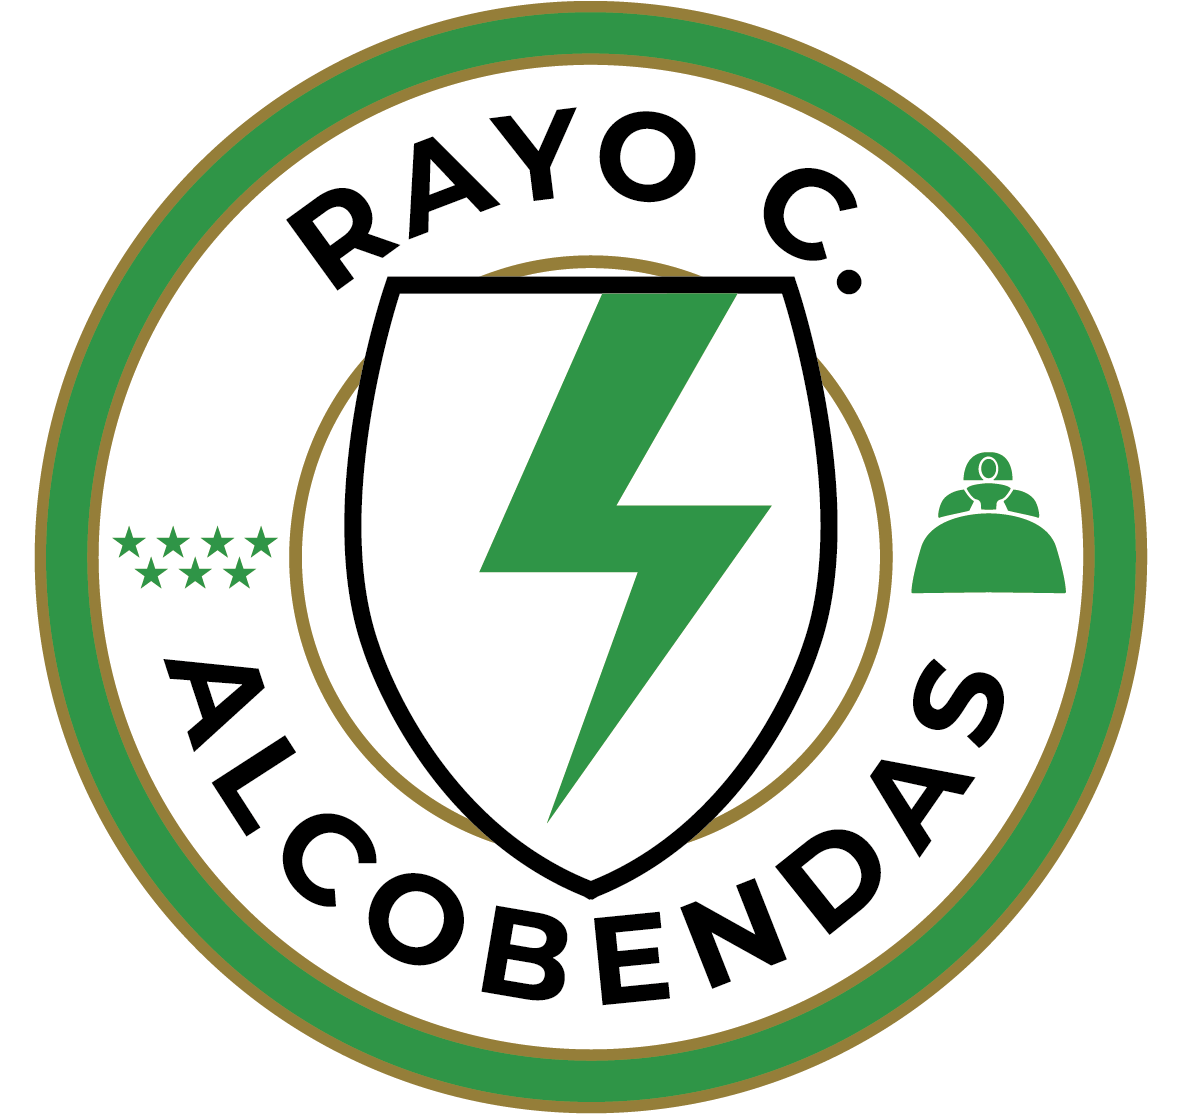 Club - Rayo Alcobendas